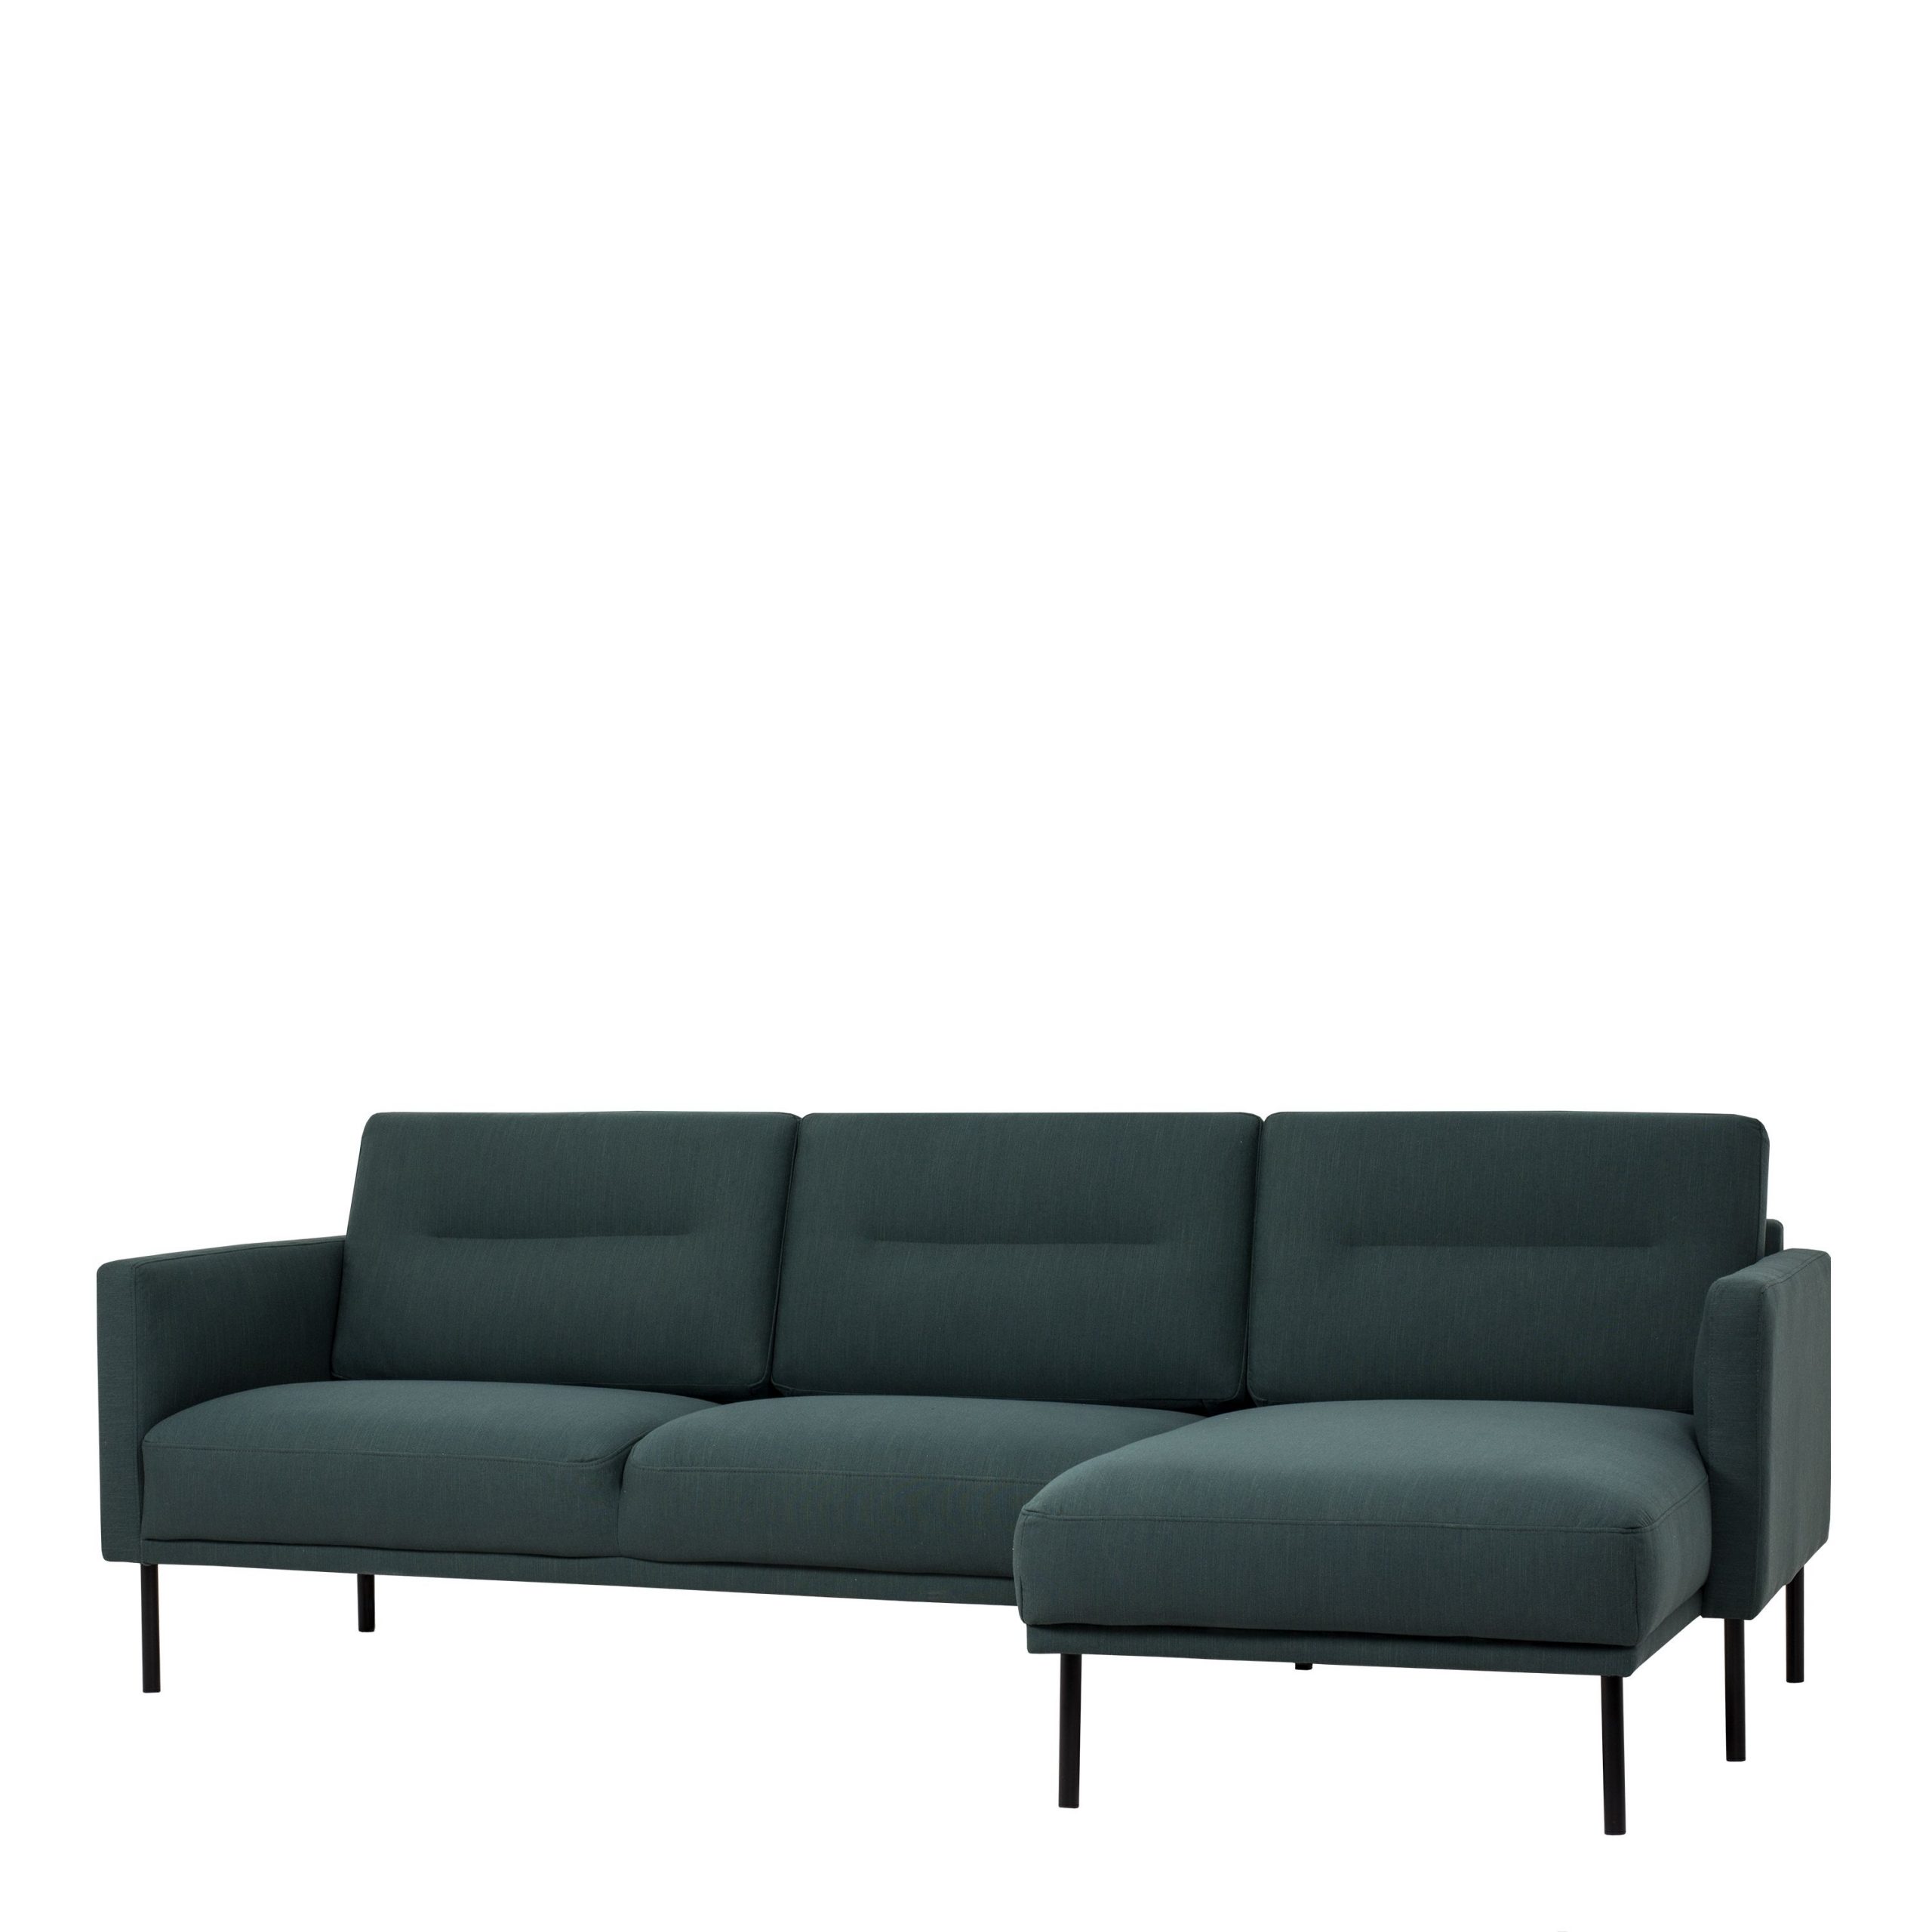 Larvik Chaiselongue Sofa (RH) – Dark Green, Black Legs